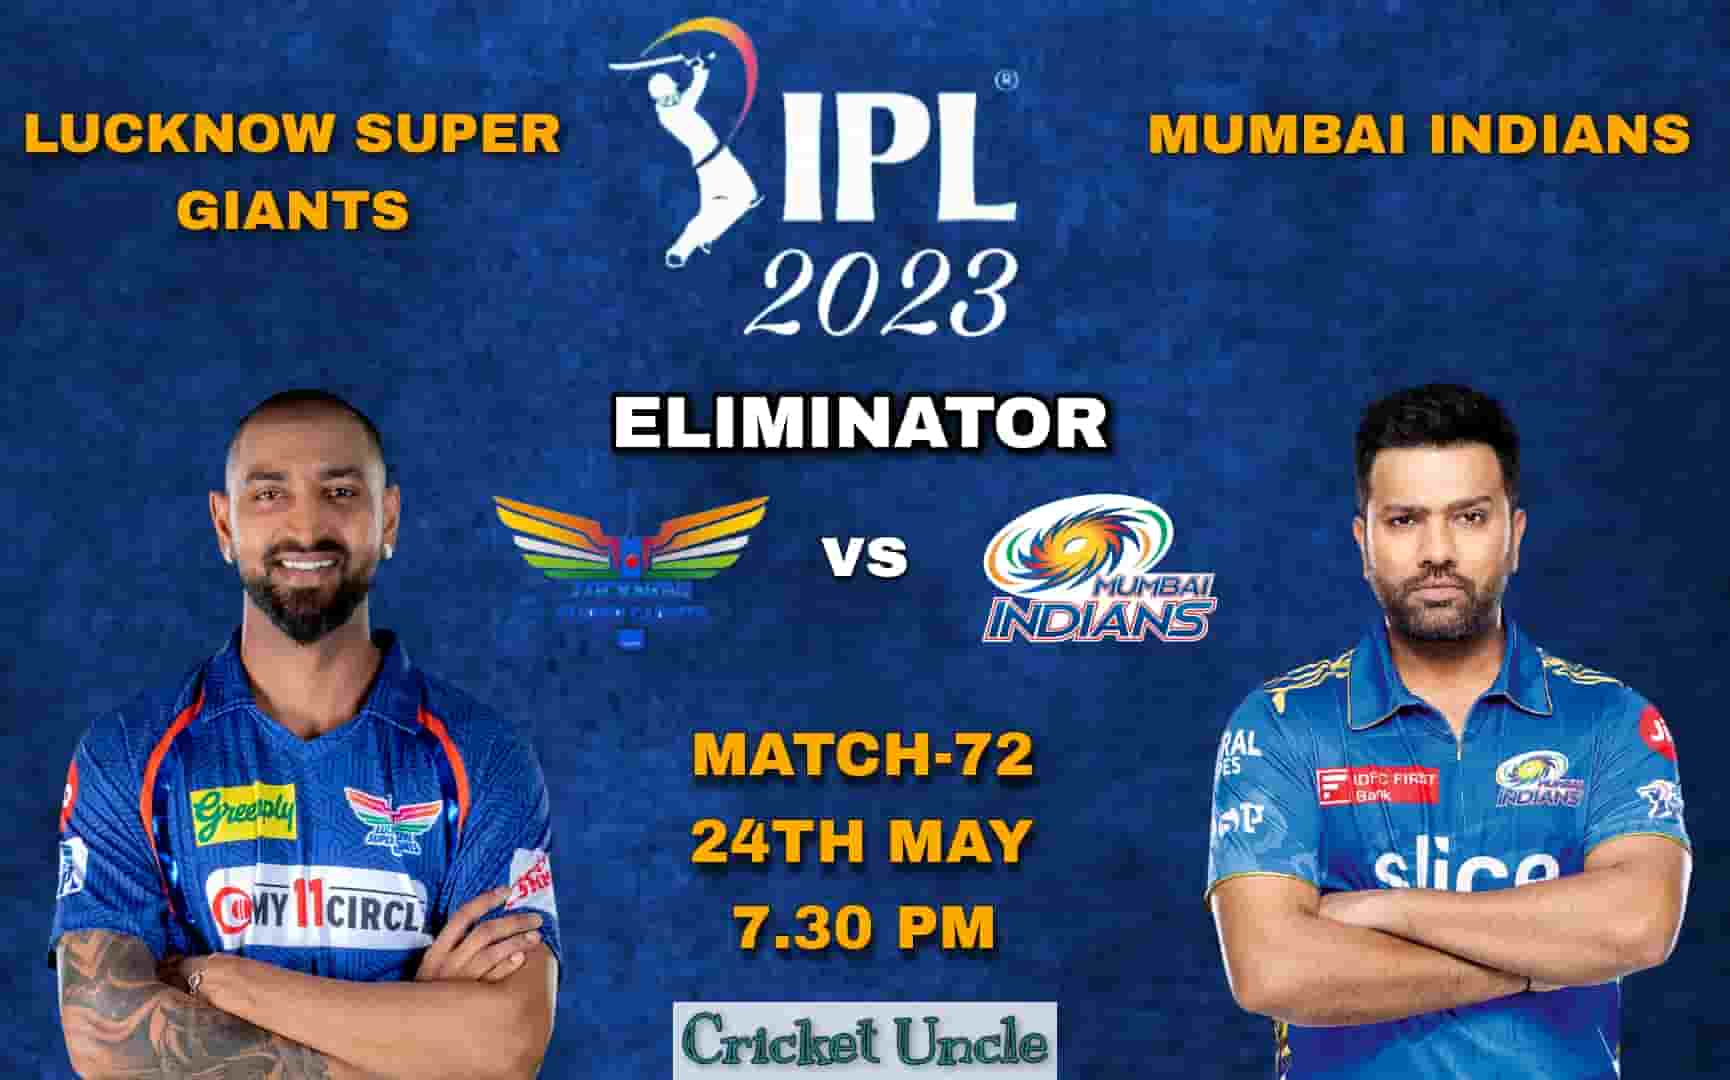 Poster of IPL 2023 Eliminator Match 72 prediction between Lucknow Super Giants vs Mumbai Indians